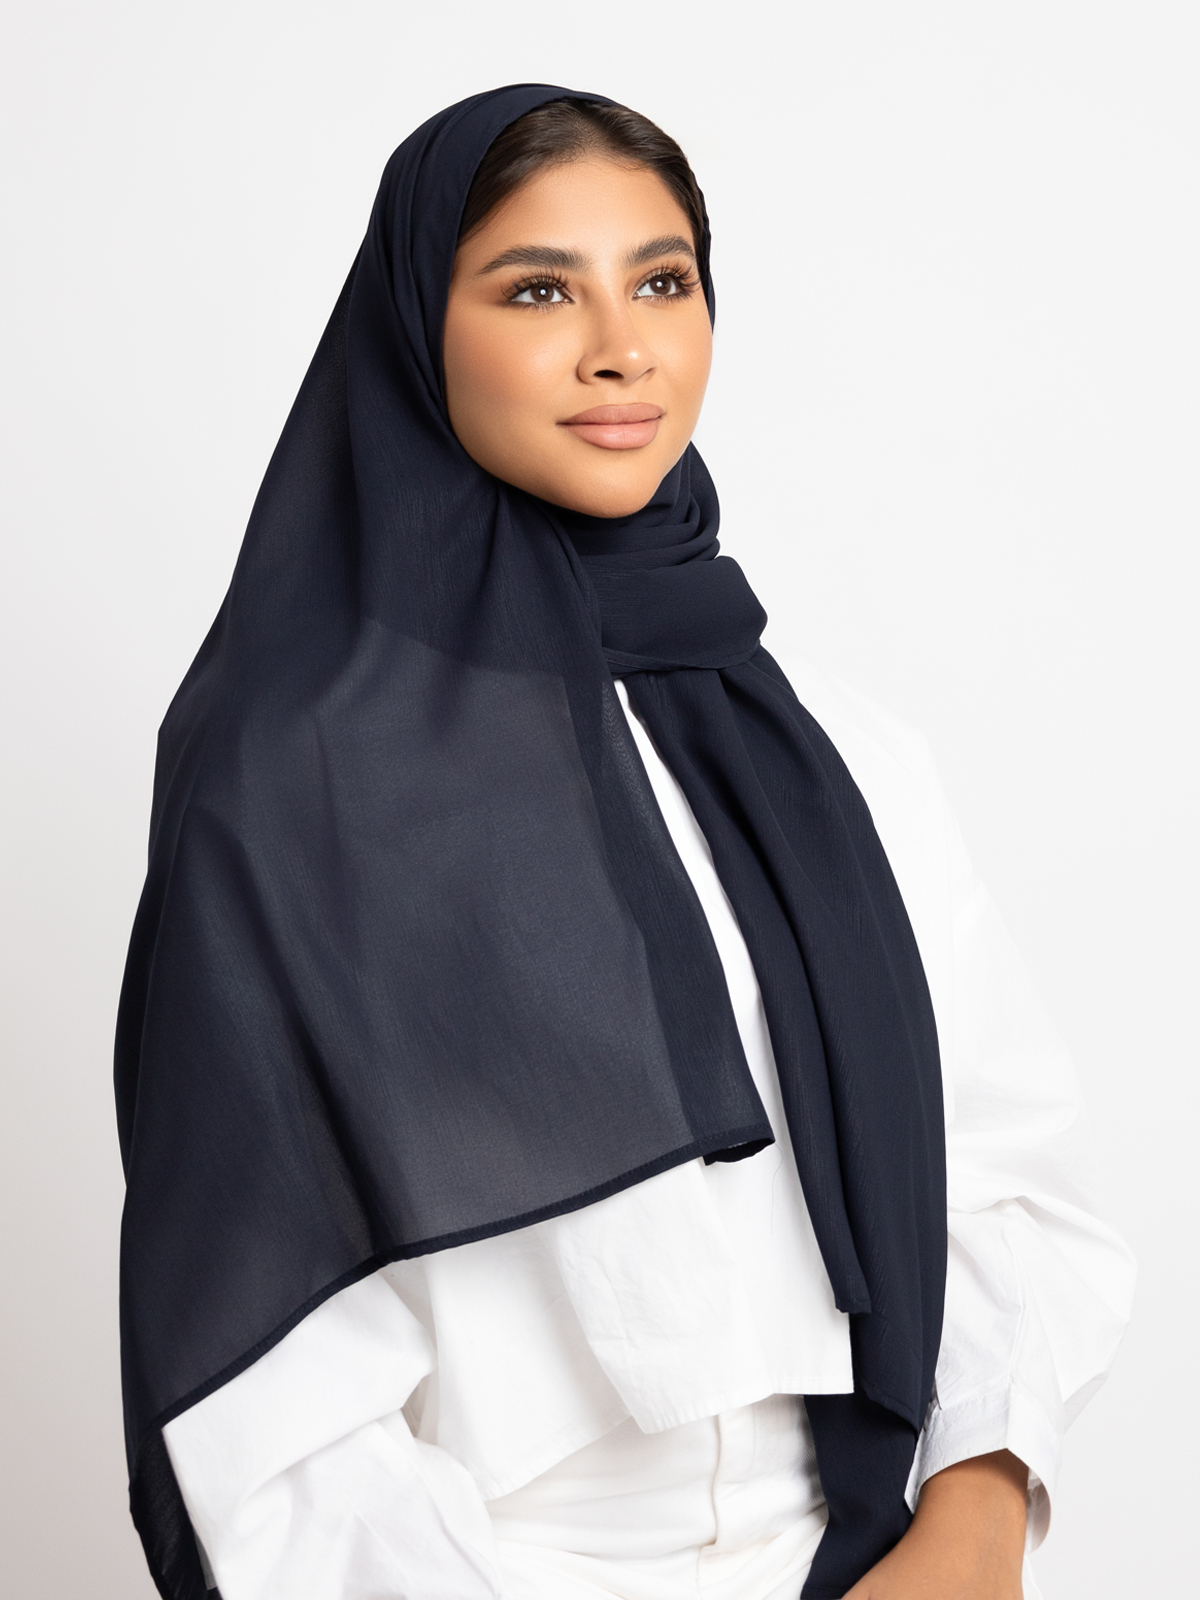 Luxurious chiffon hijab plain tarha 200 cm long navy color high quality material online in ksa by kaafmeem